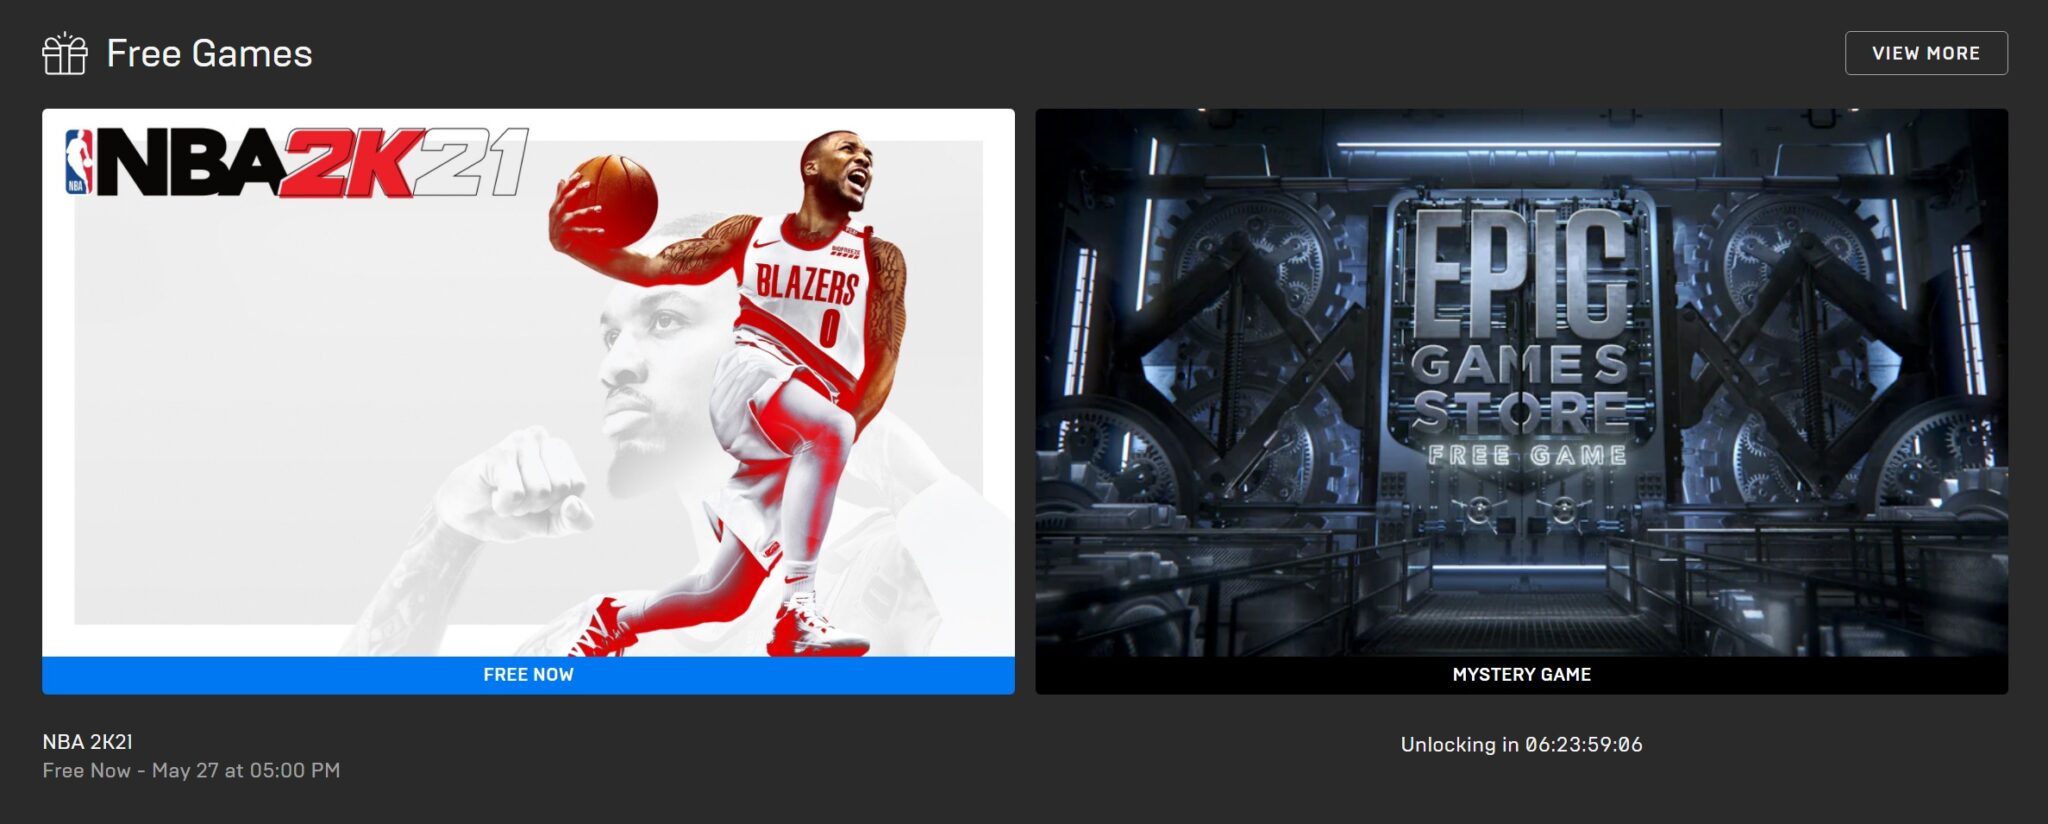 NBA 2K21 está gratis en la Epic Games Store, aprovecha!